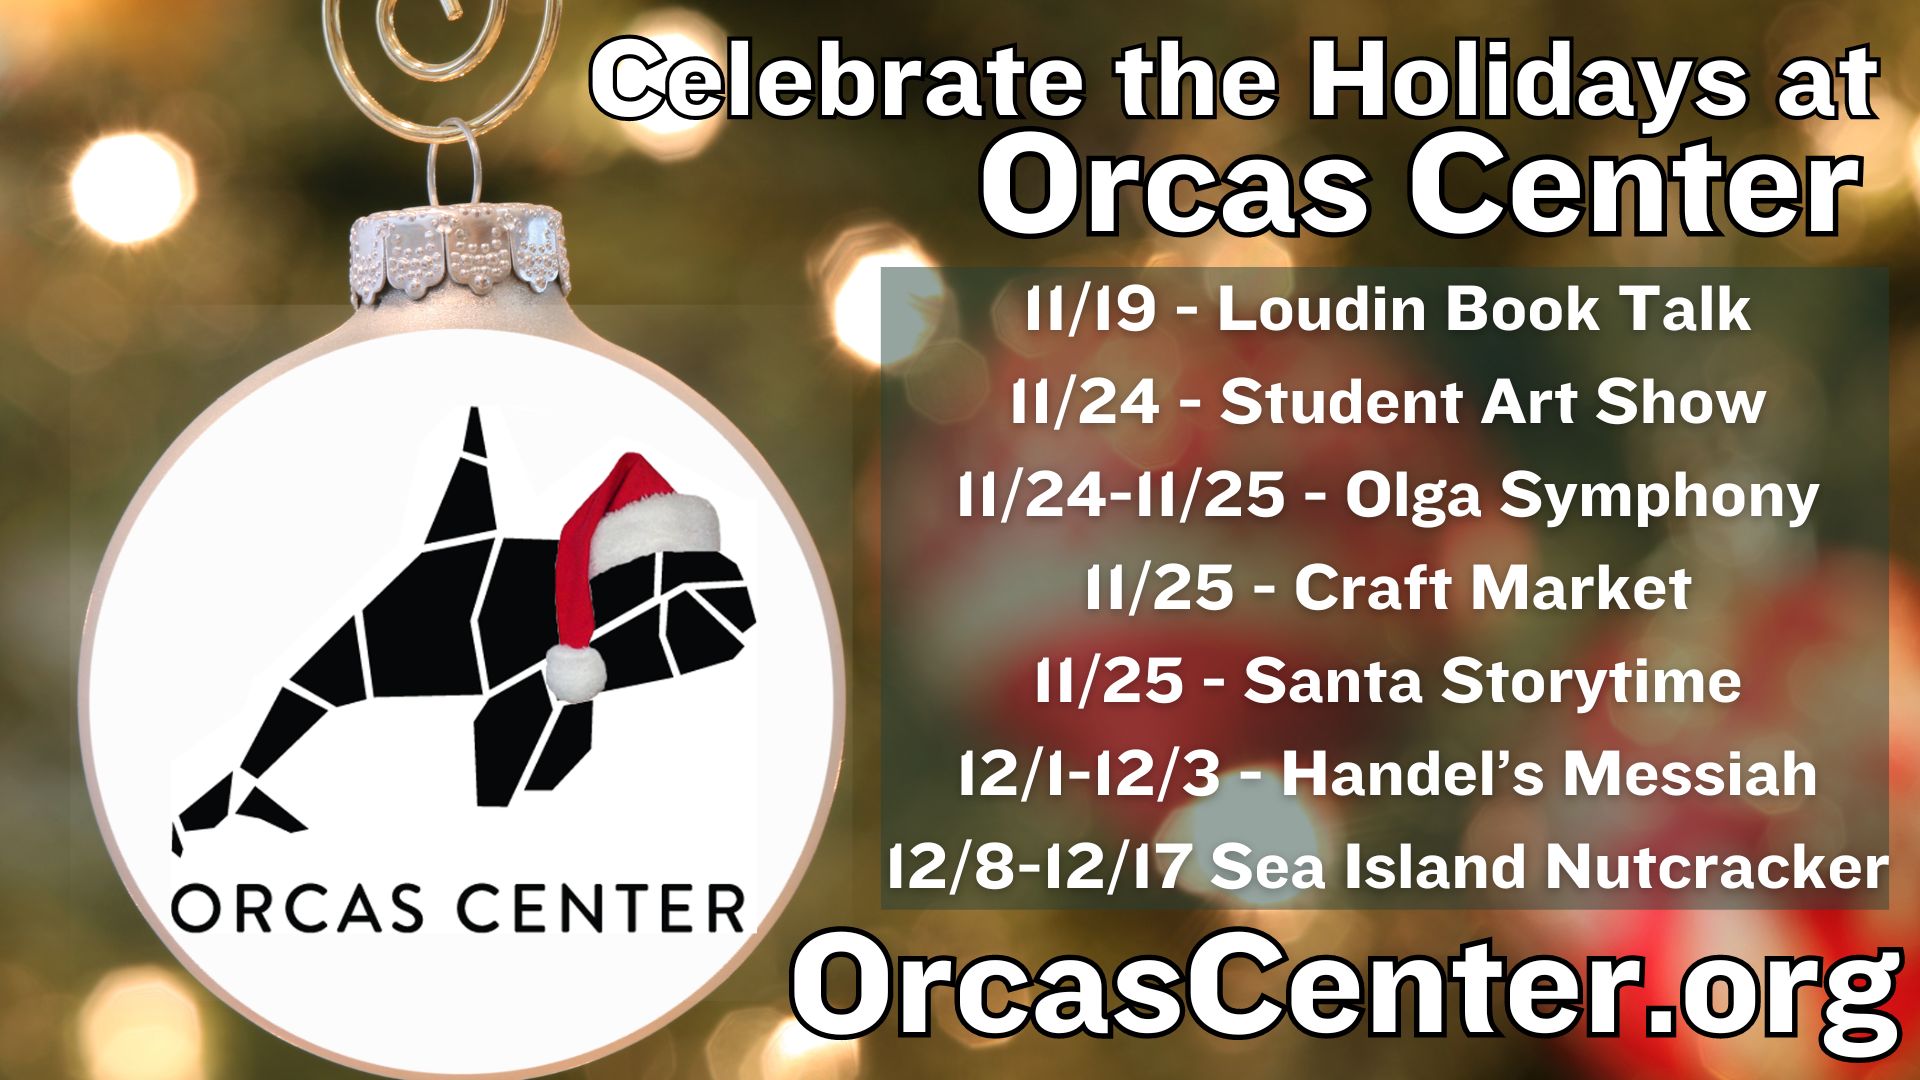 Get Into the Festive Spirit at Orcas Center!